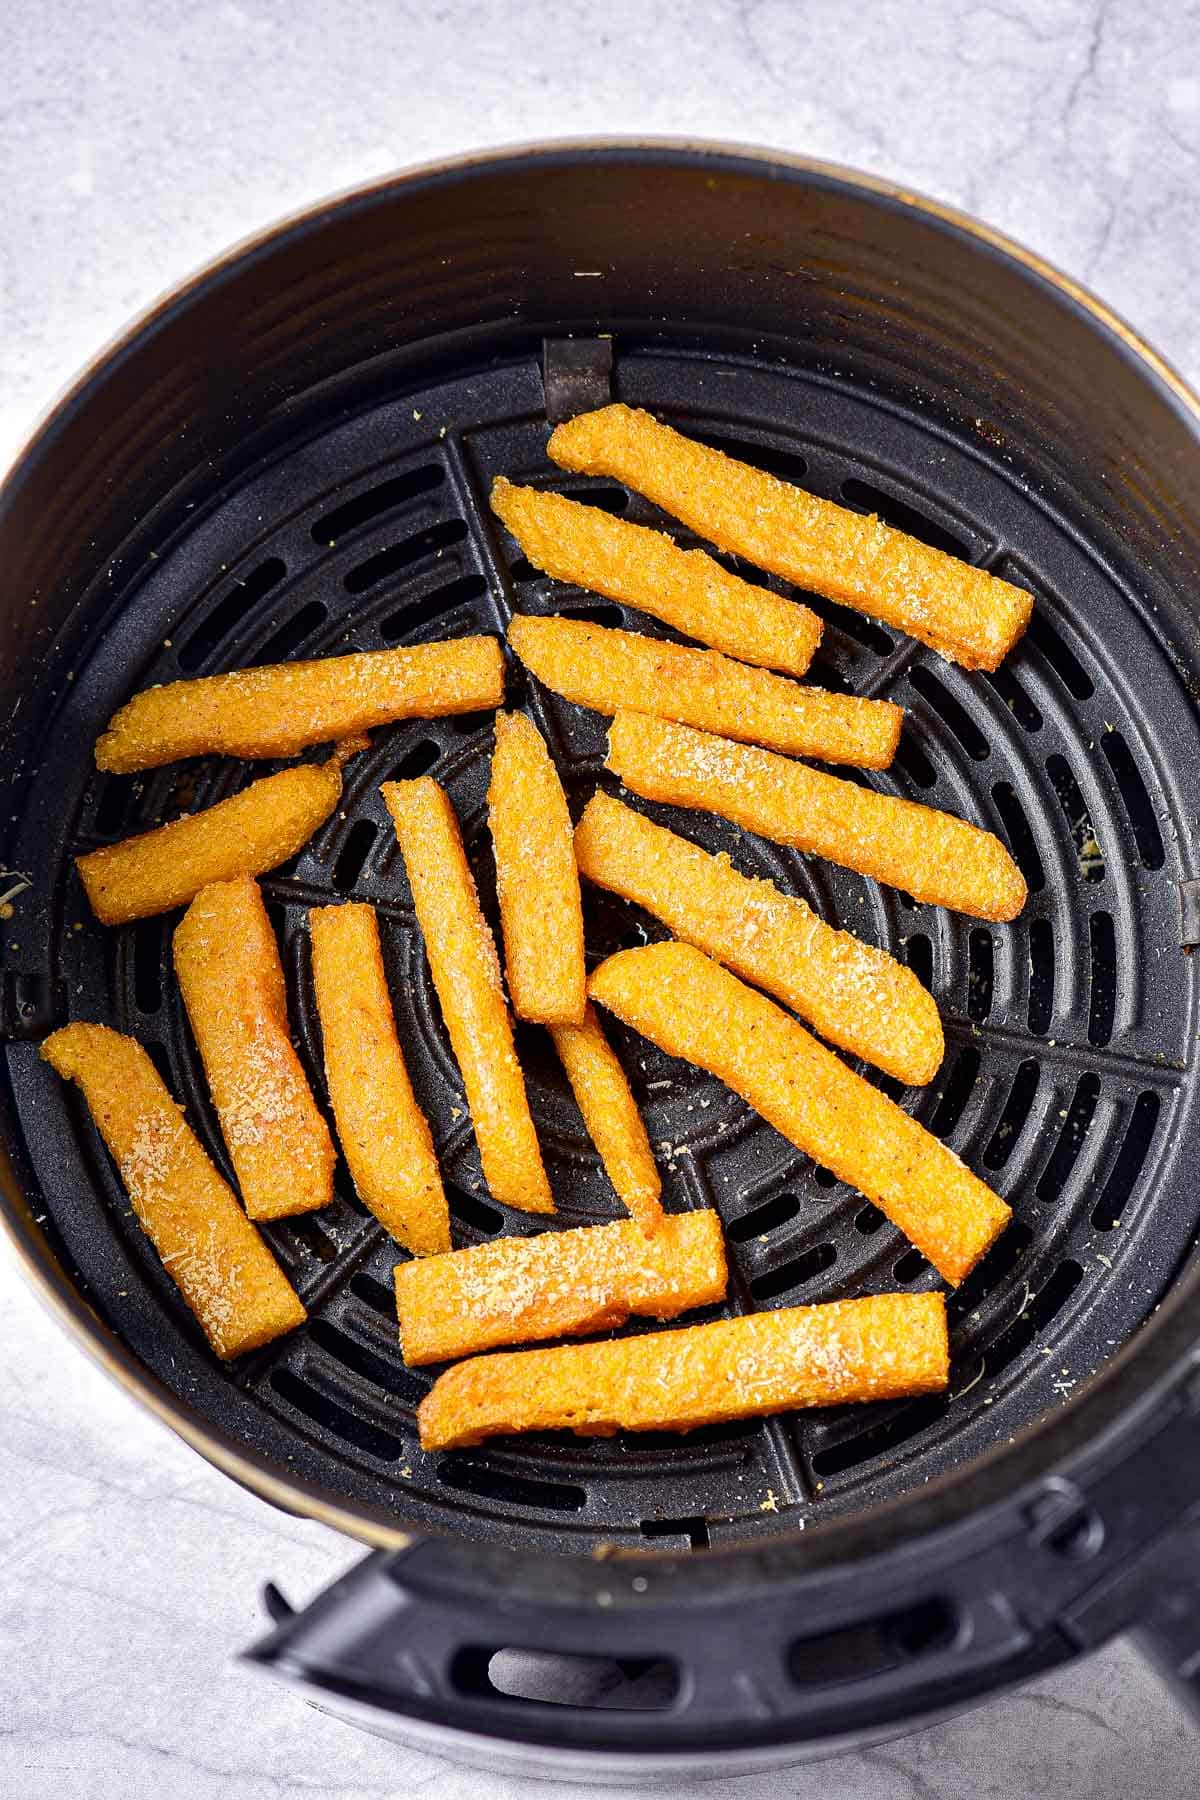 round black air fryer basket with cooked polenta fries inside.